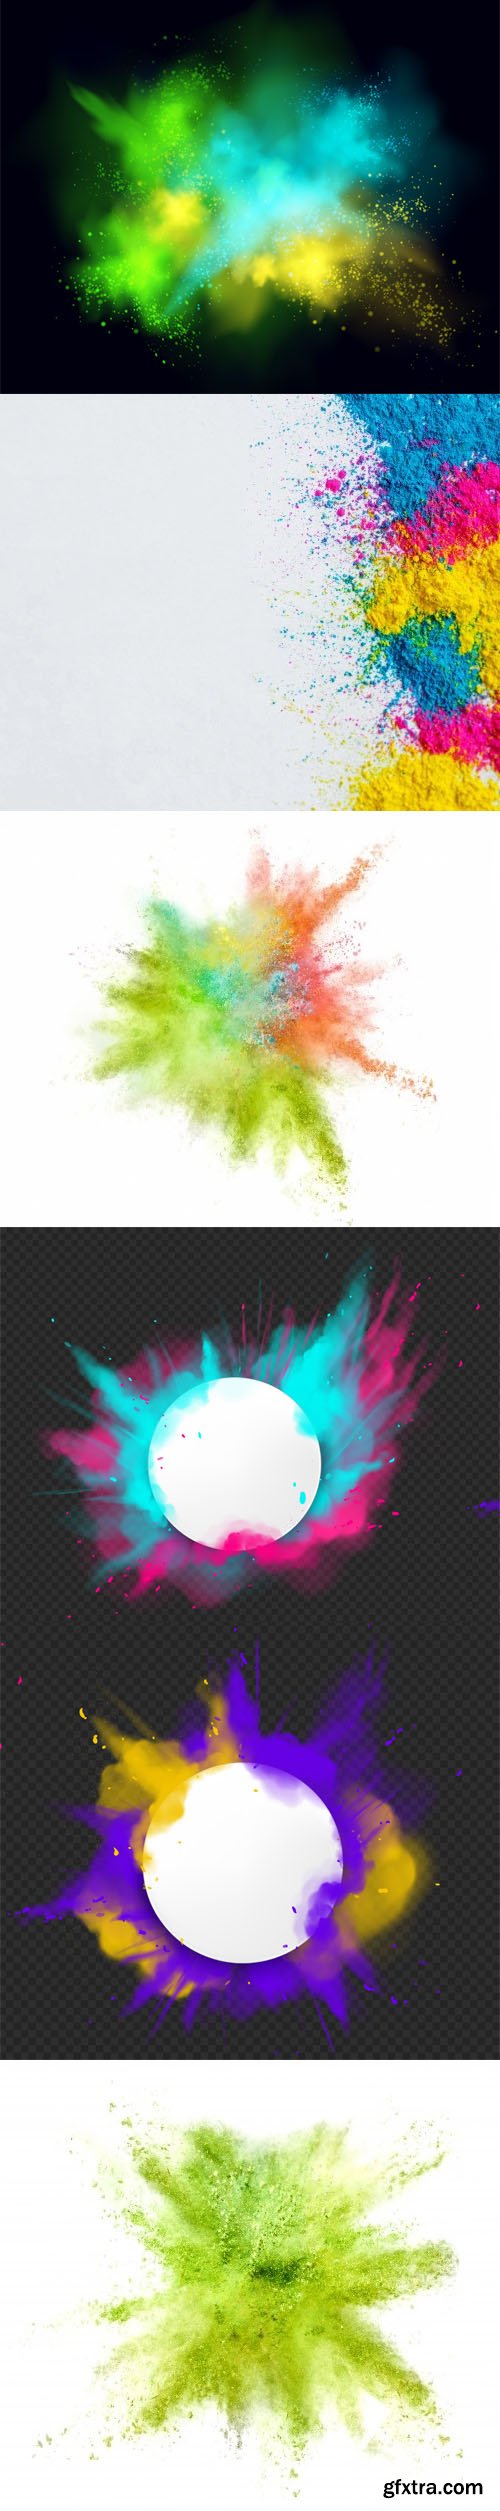 Amazing Paint & Powder Explosions Vector Design Templates